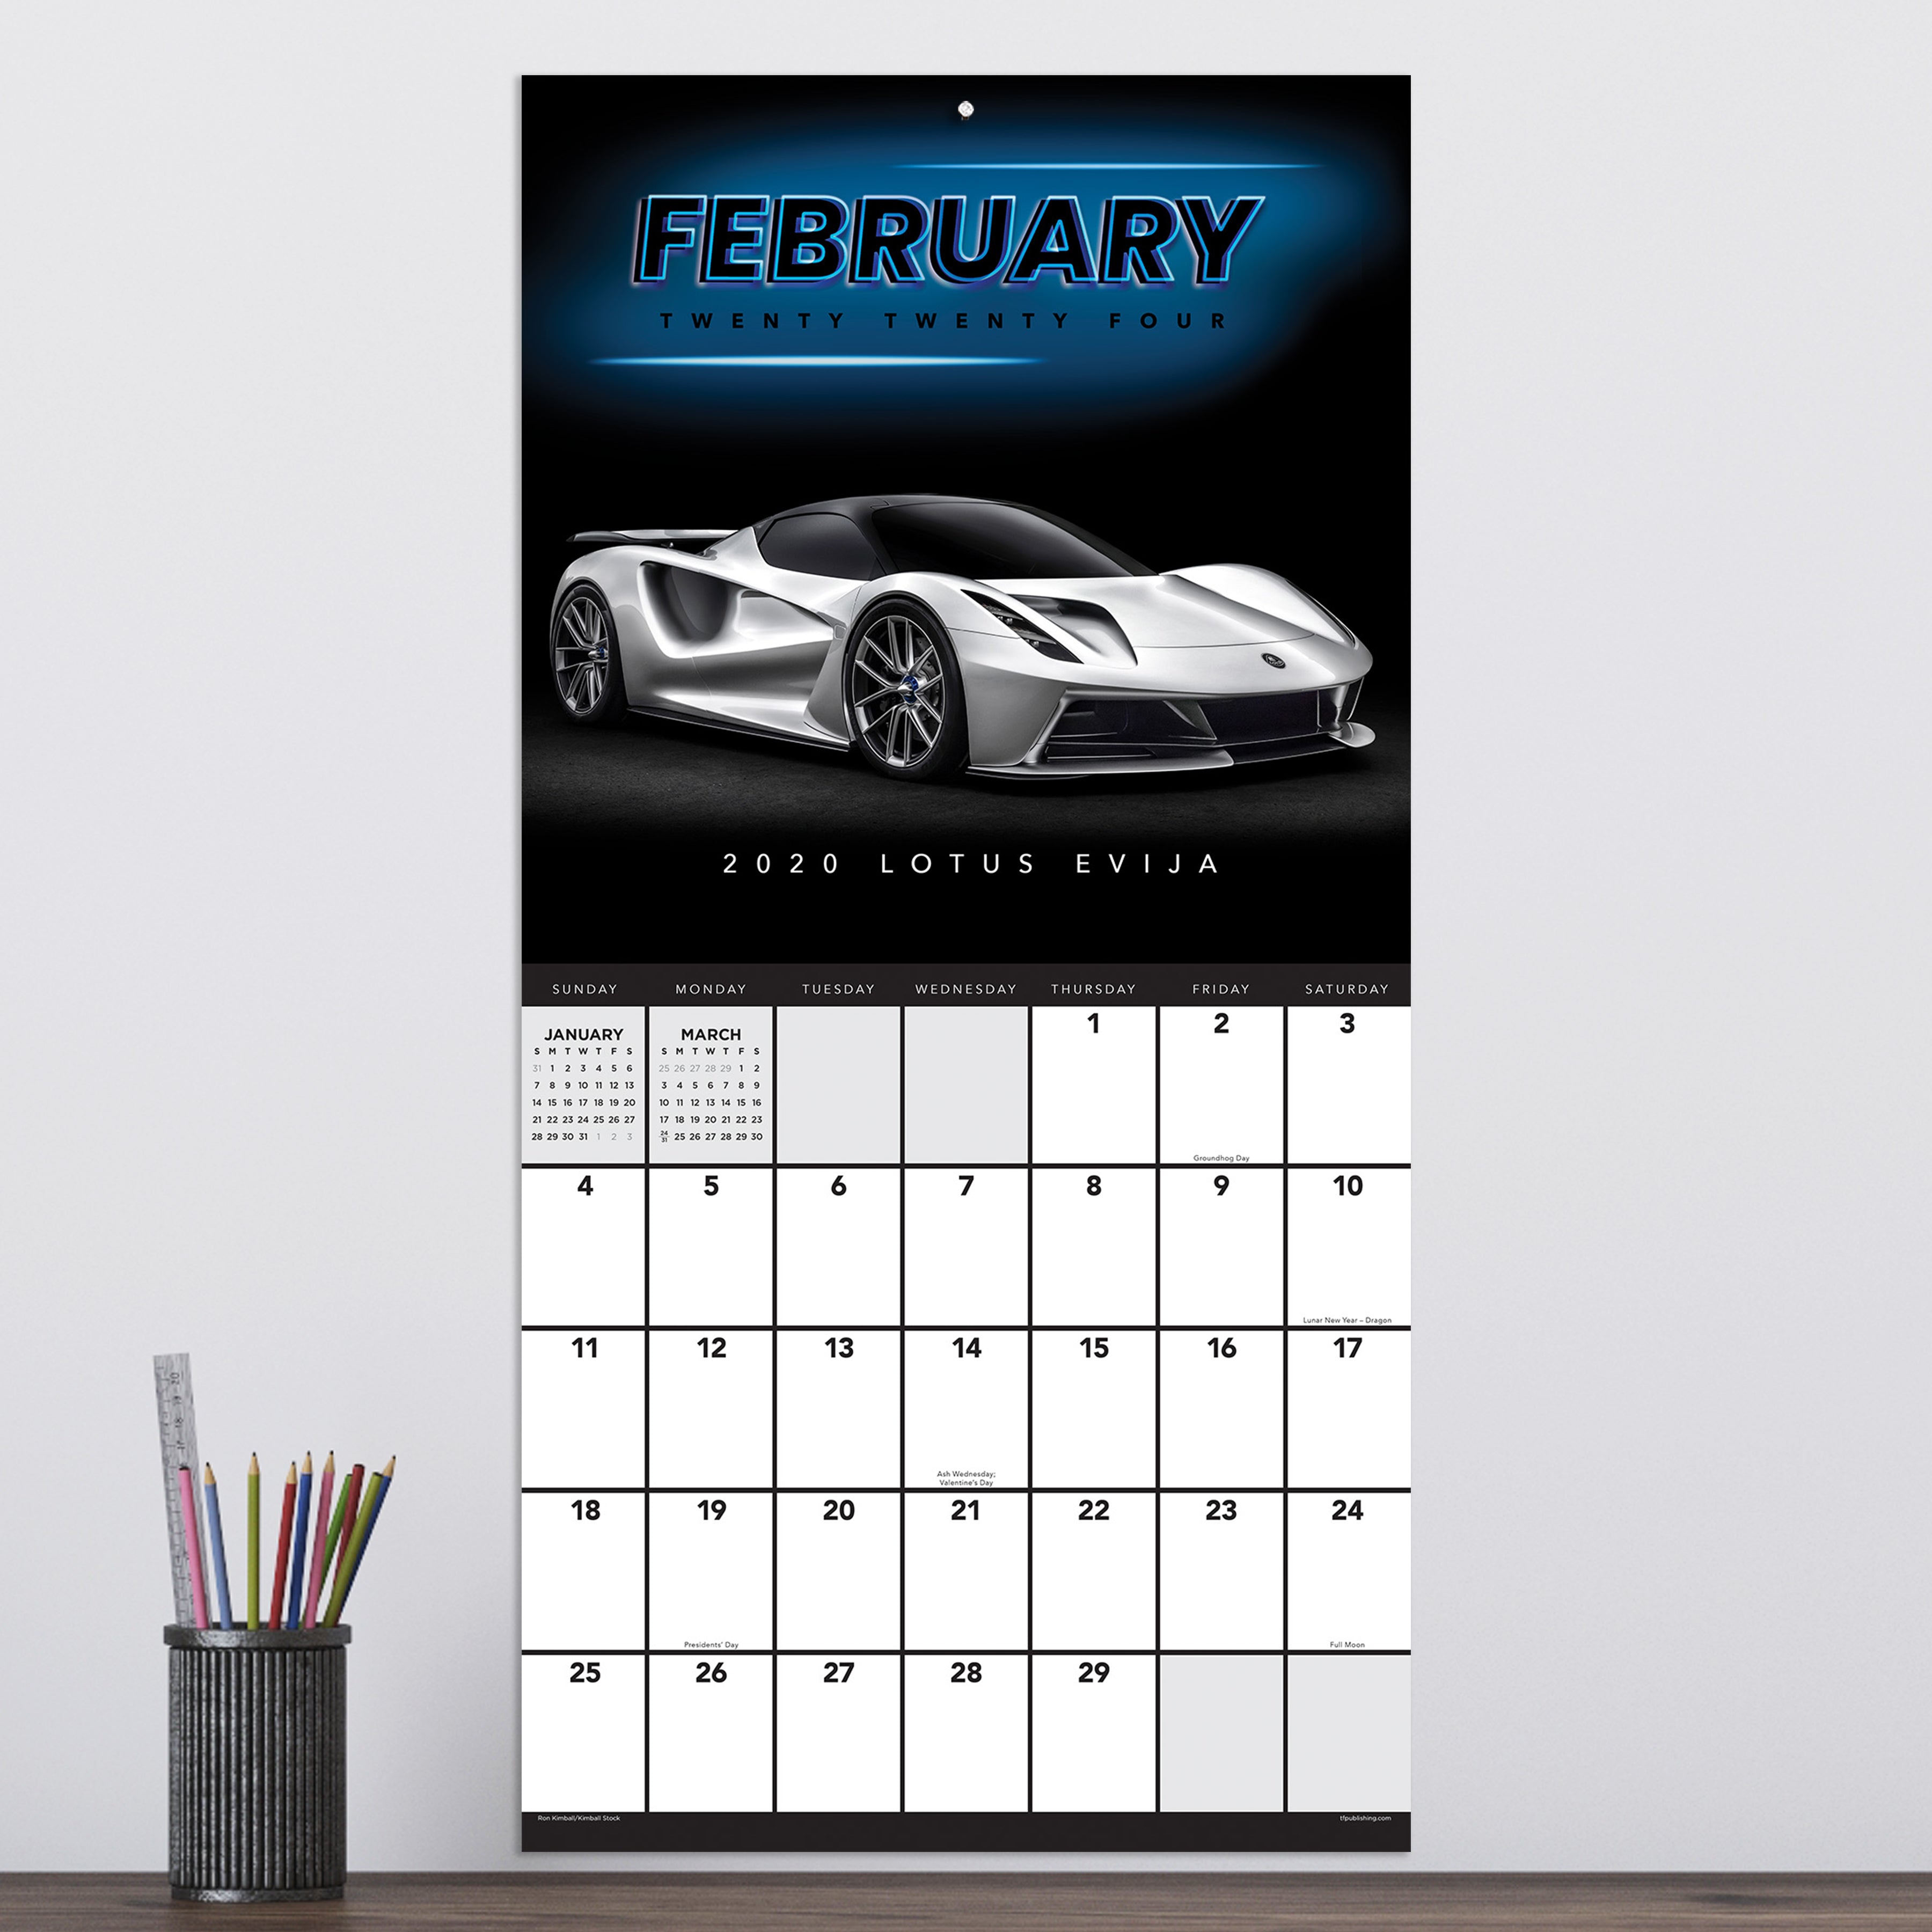 2024 Dream Cars - Square Wall Calendar